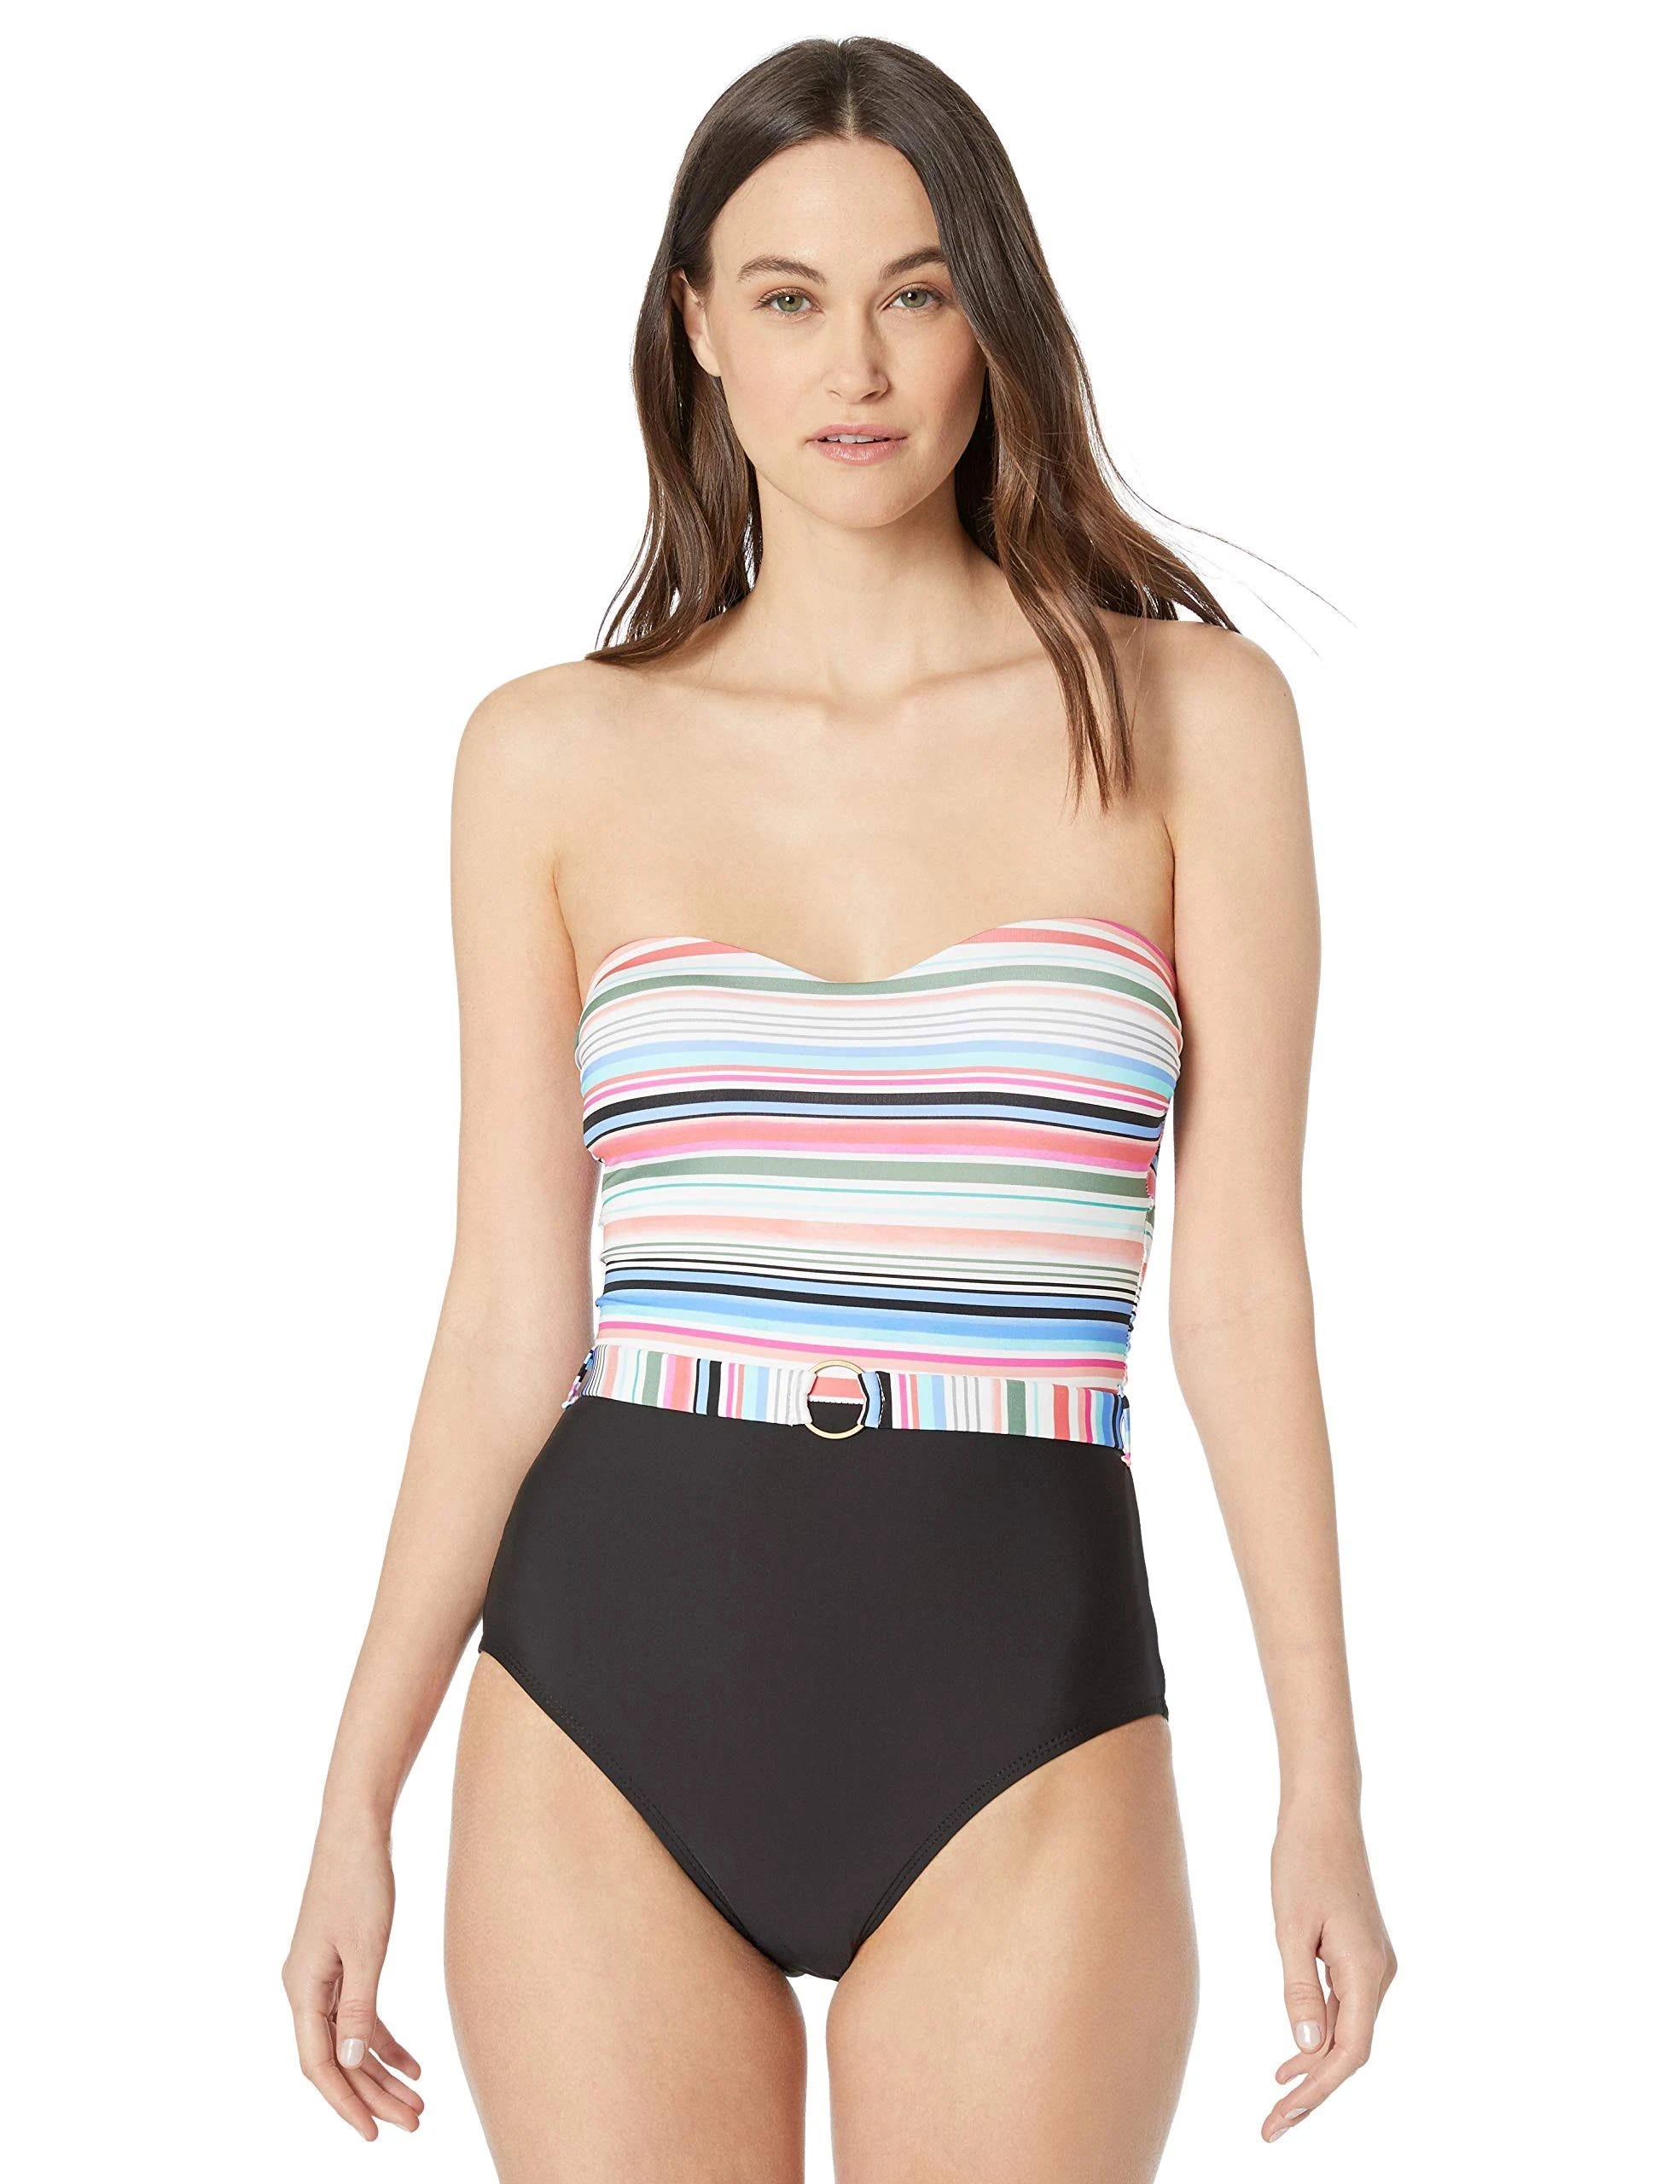 Stylish, Strapless Bandeau Swimsuit with Tummy Control | Image